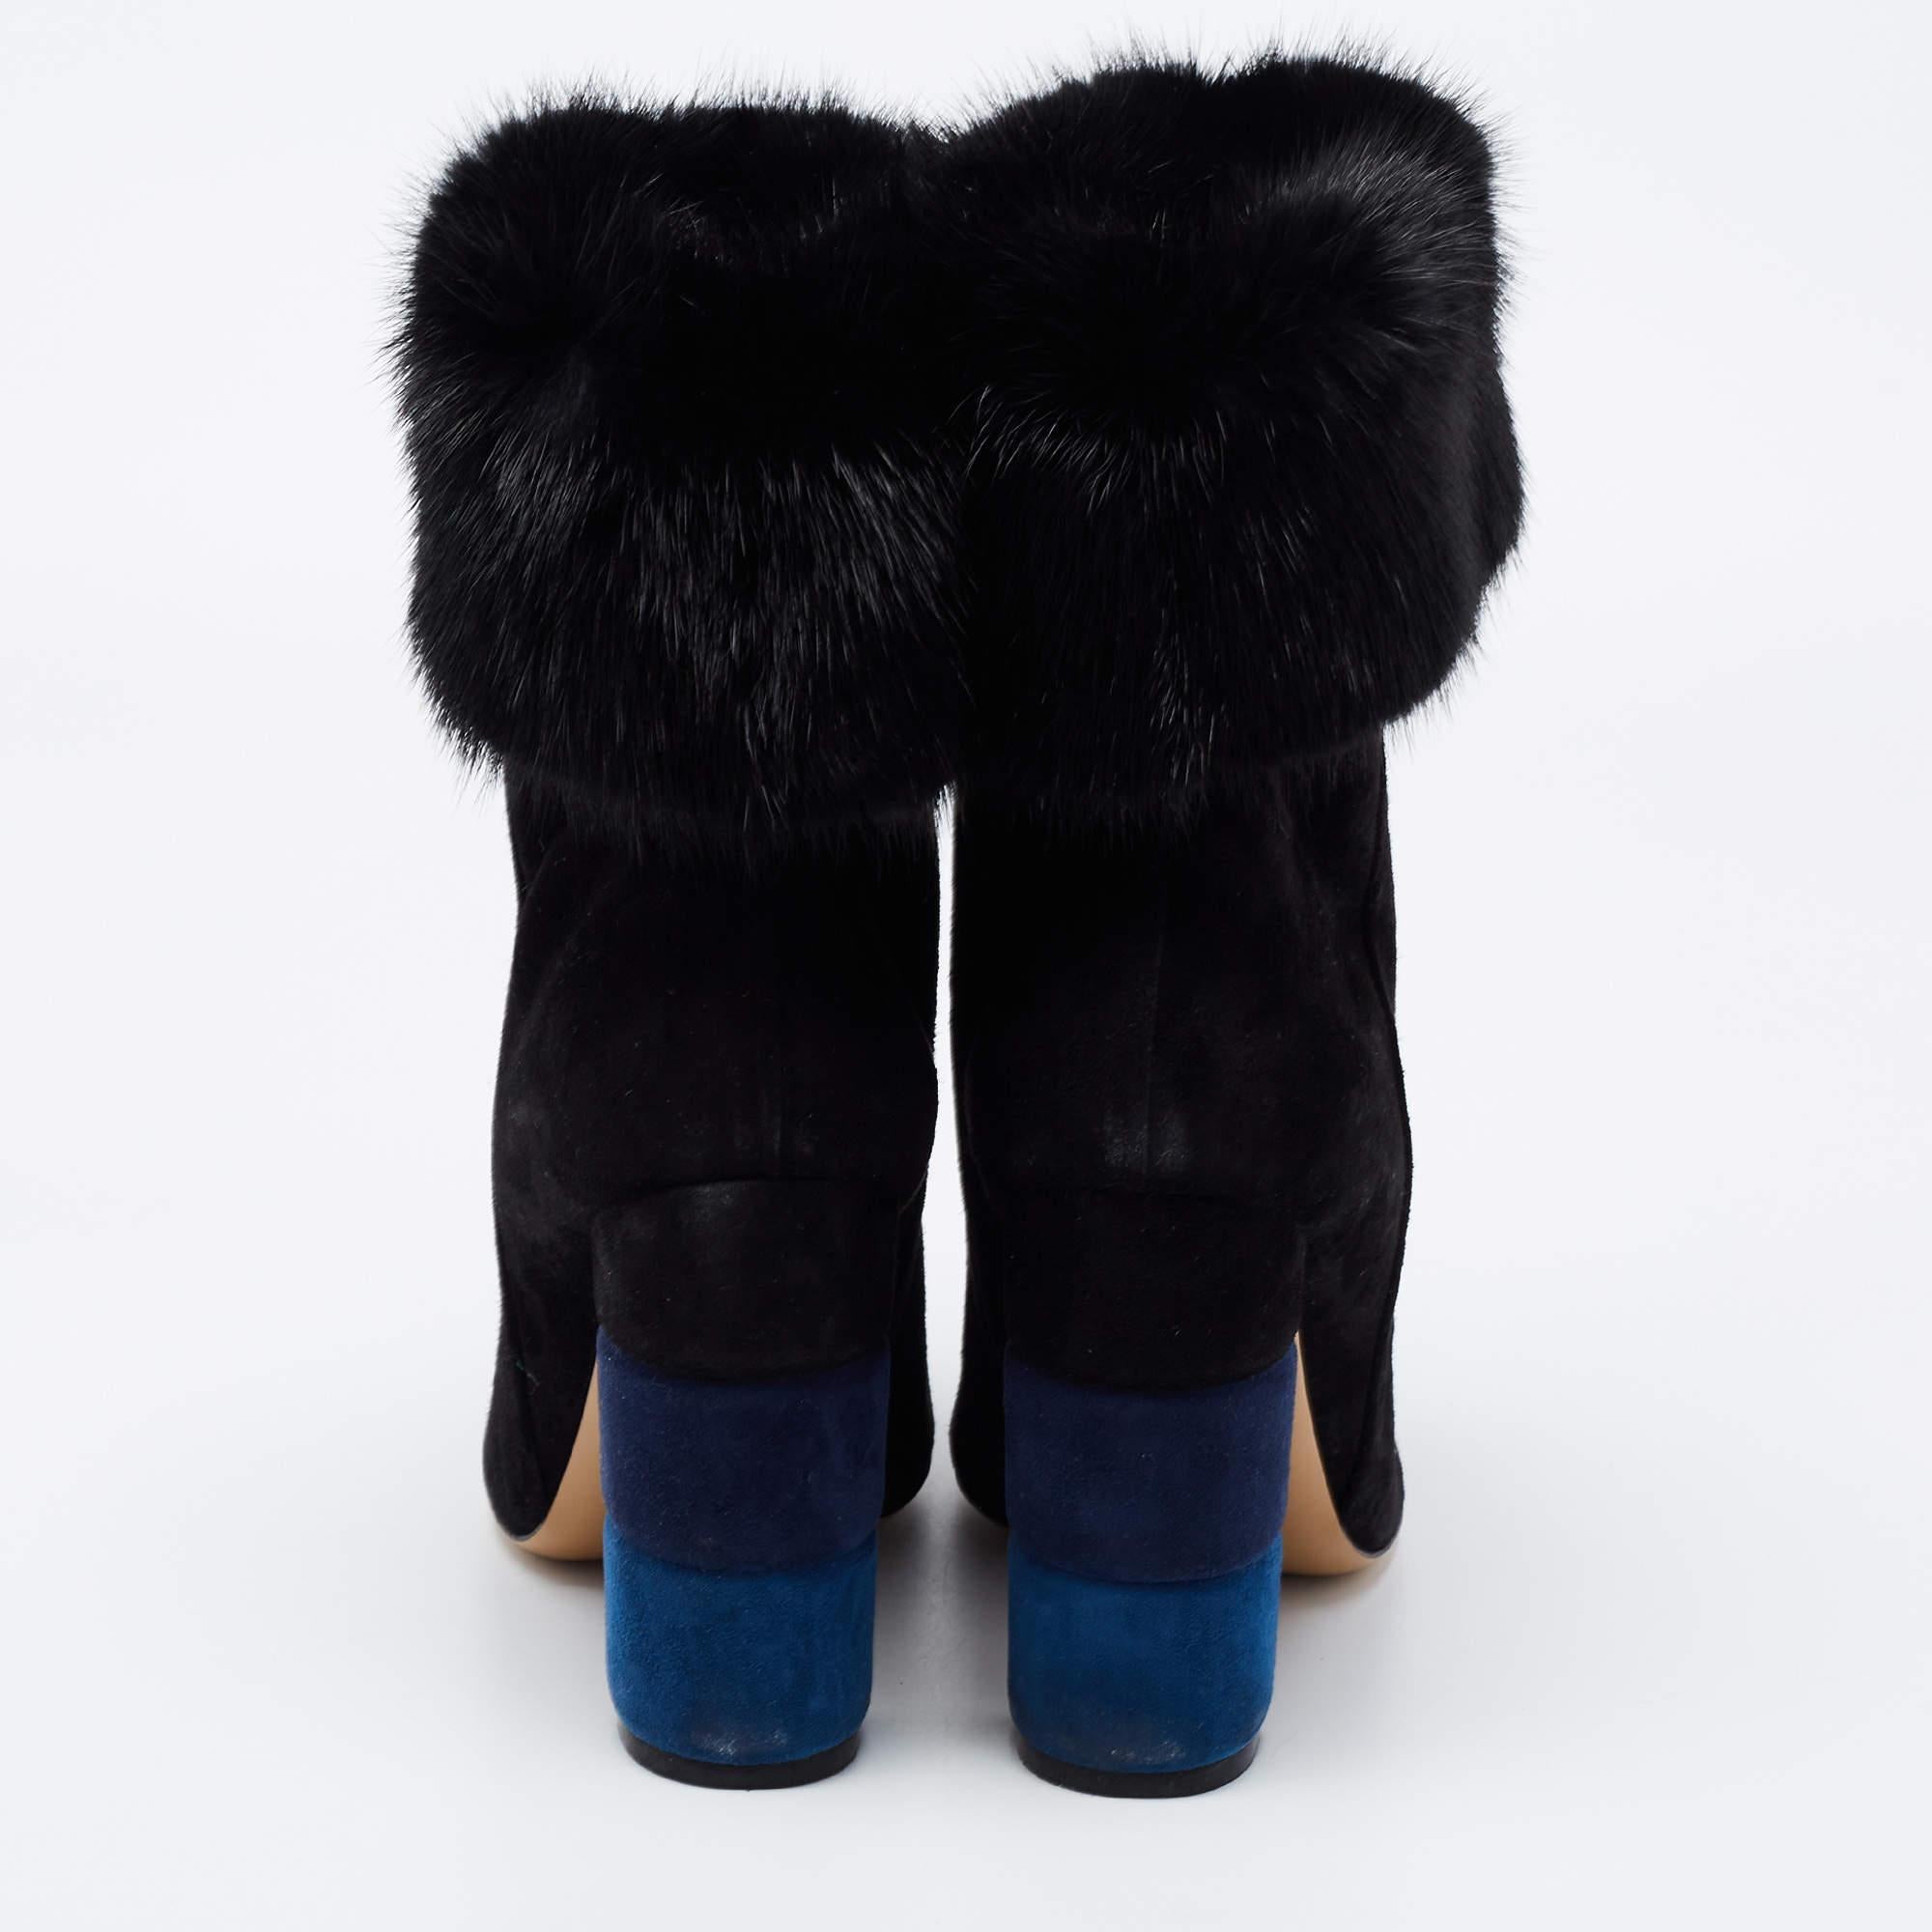 Salvatore Ferragamo Black Suede and Fur Loris Ankle Boots Size 40 1